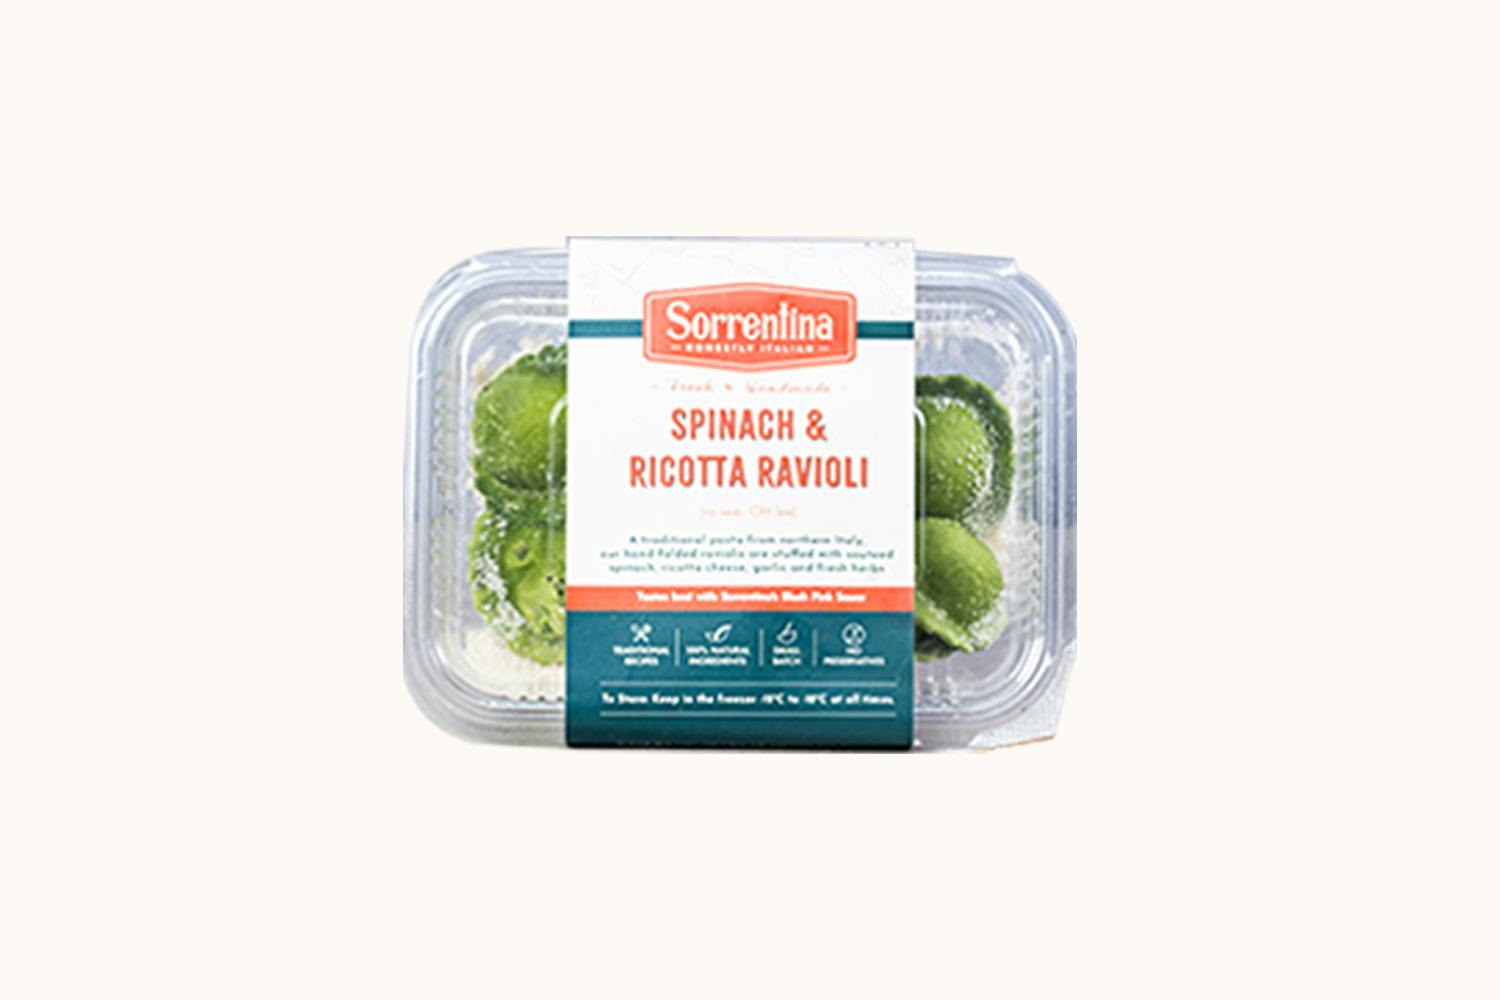 Sorrentina Spinach & Ricotta Ravioli